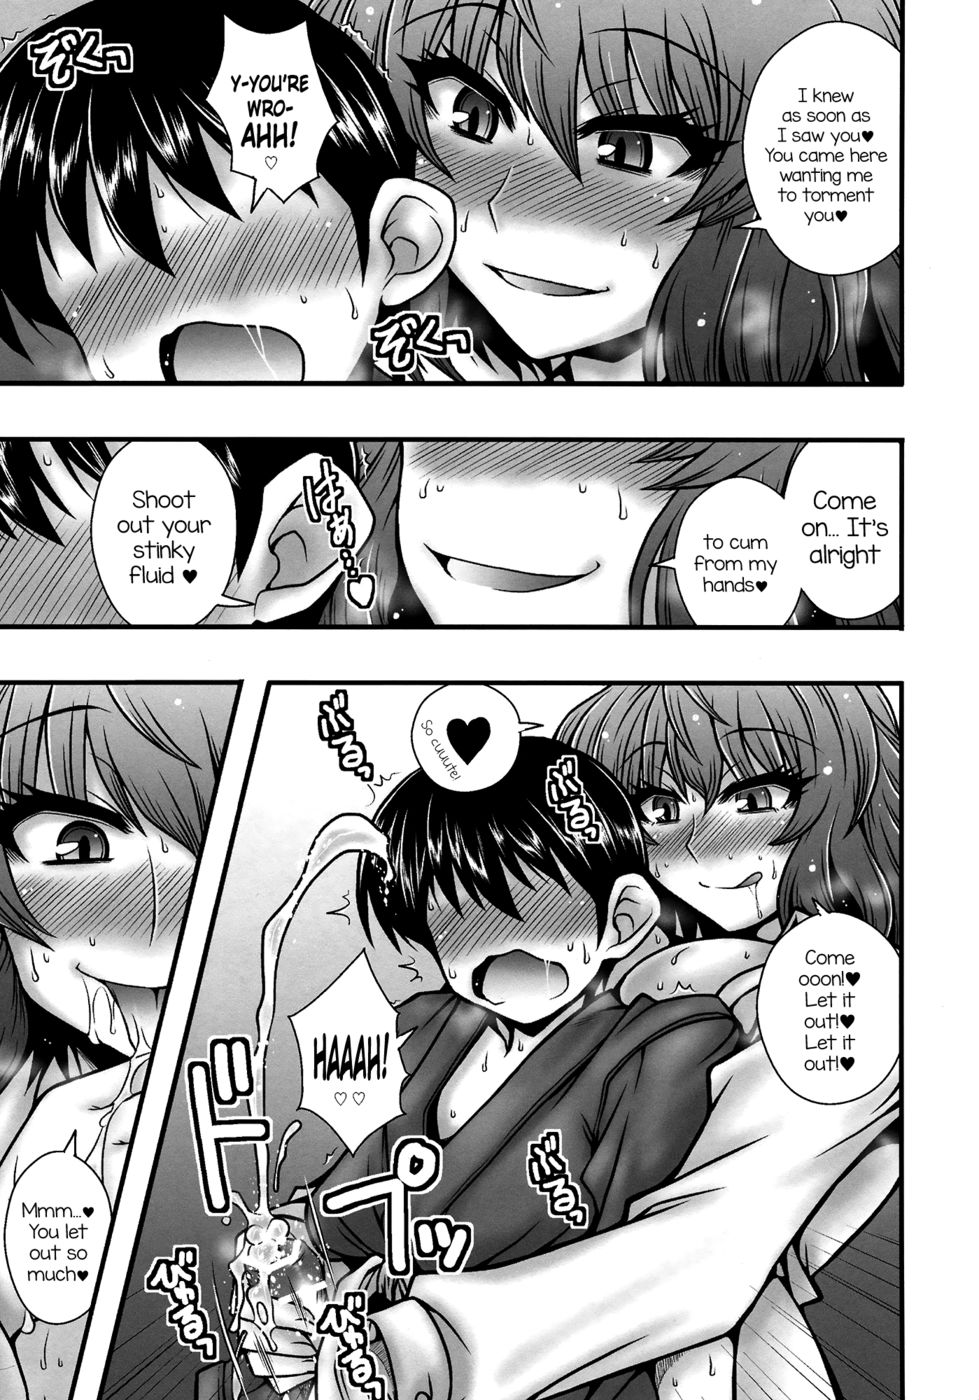 Hentai Manga Comic-The Tale of Yuuka Kazami's Reverse Rape of a Young Boy-Read-4